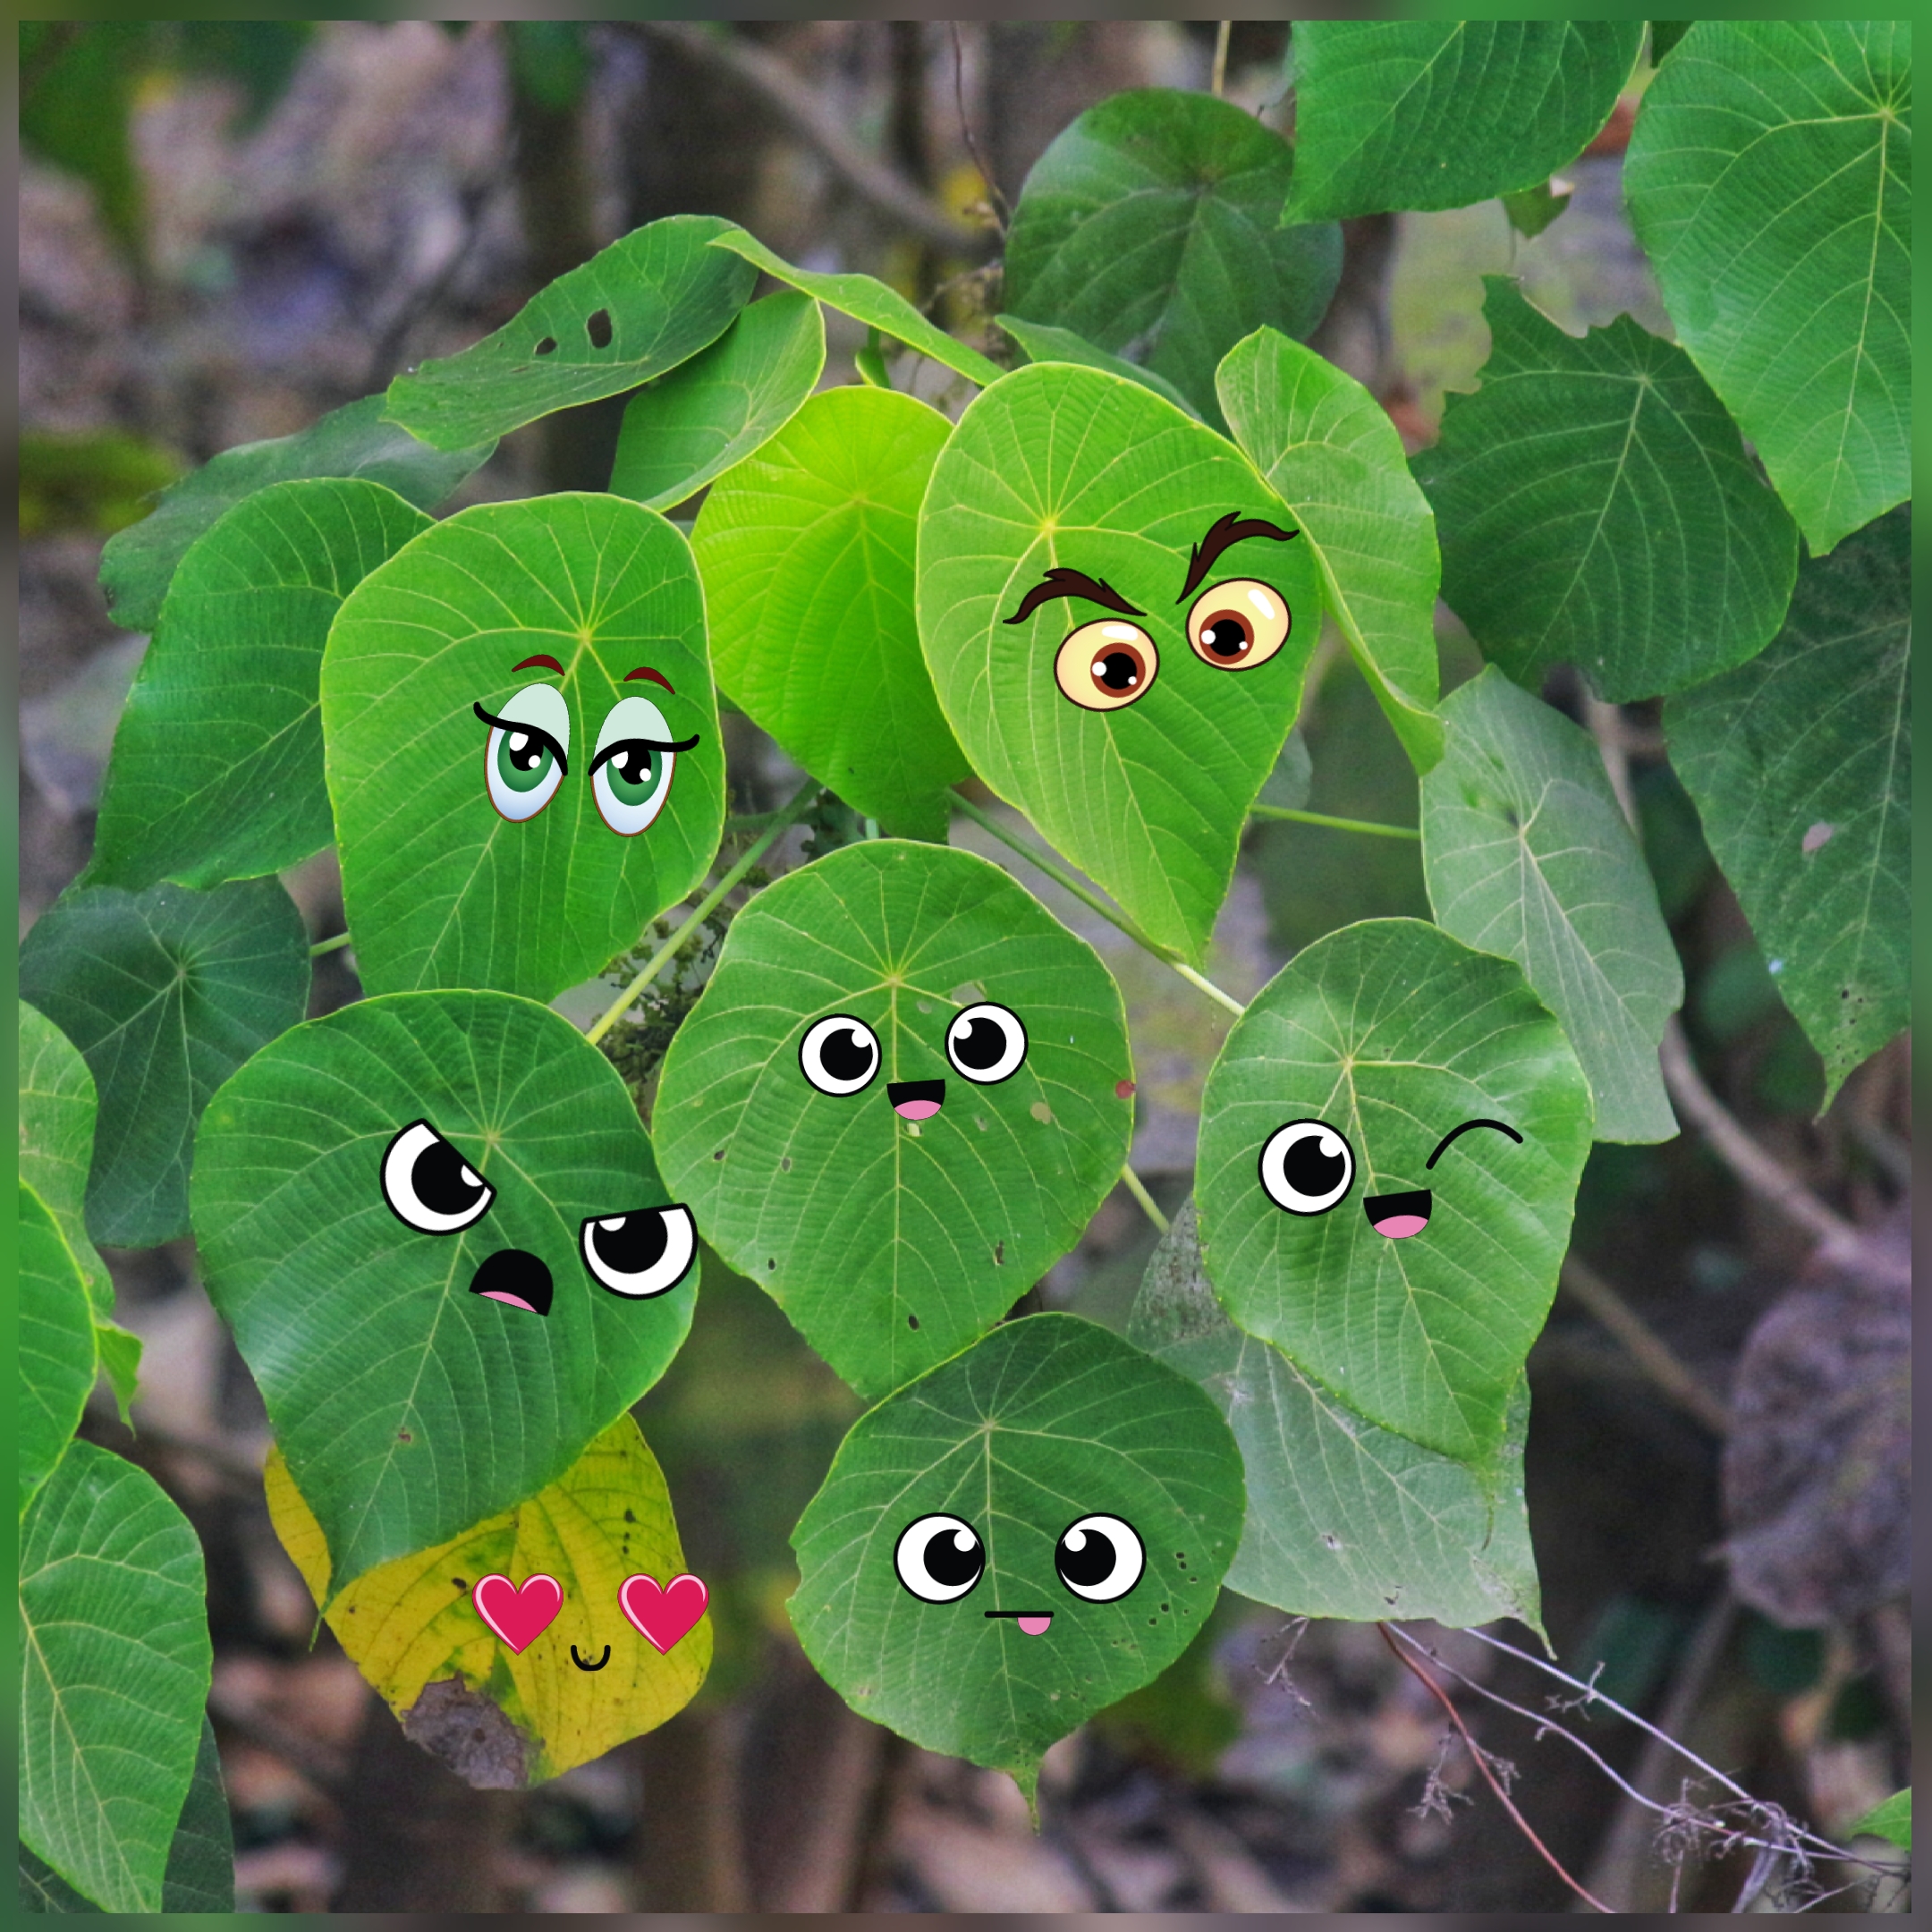 Sticker eyes on plant leaves